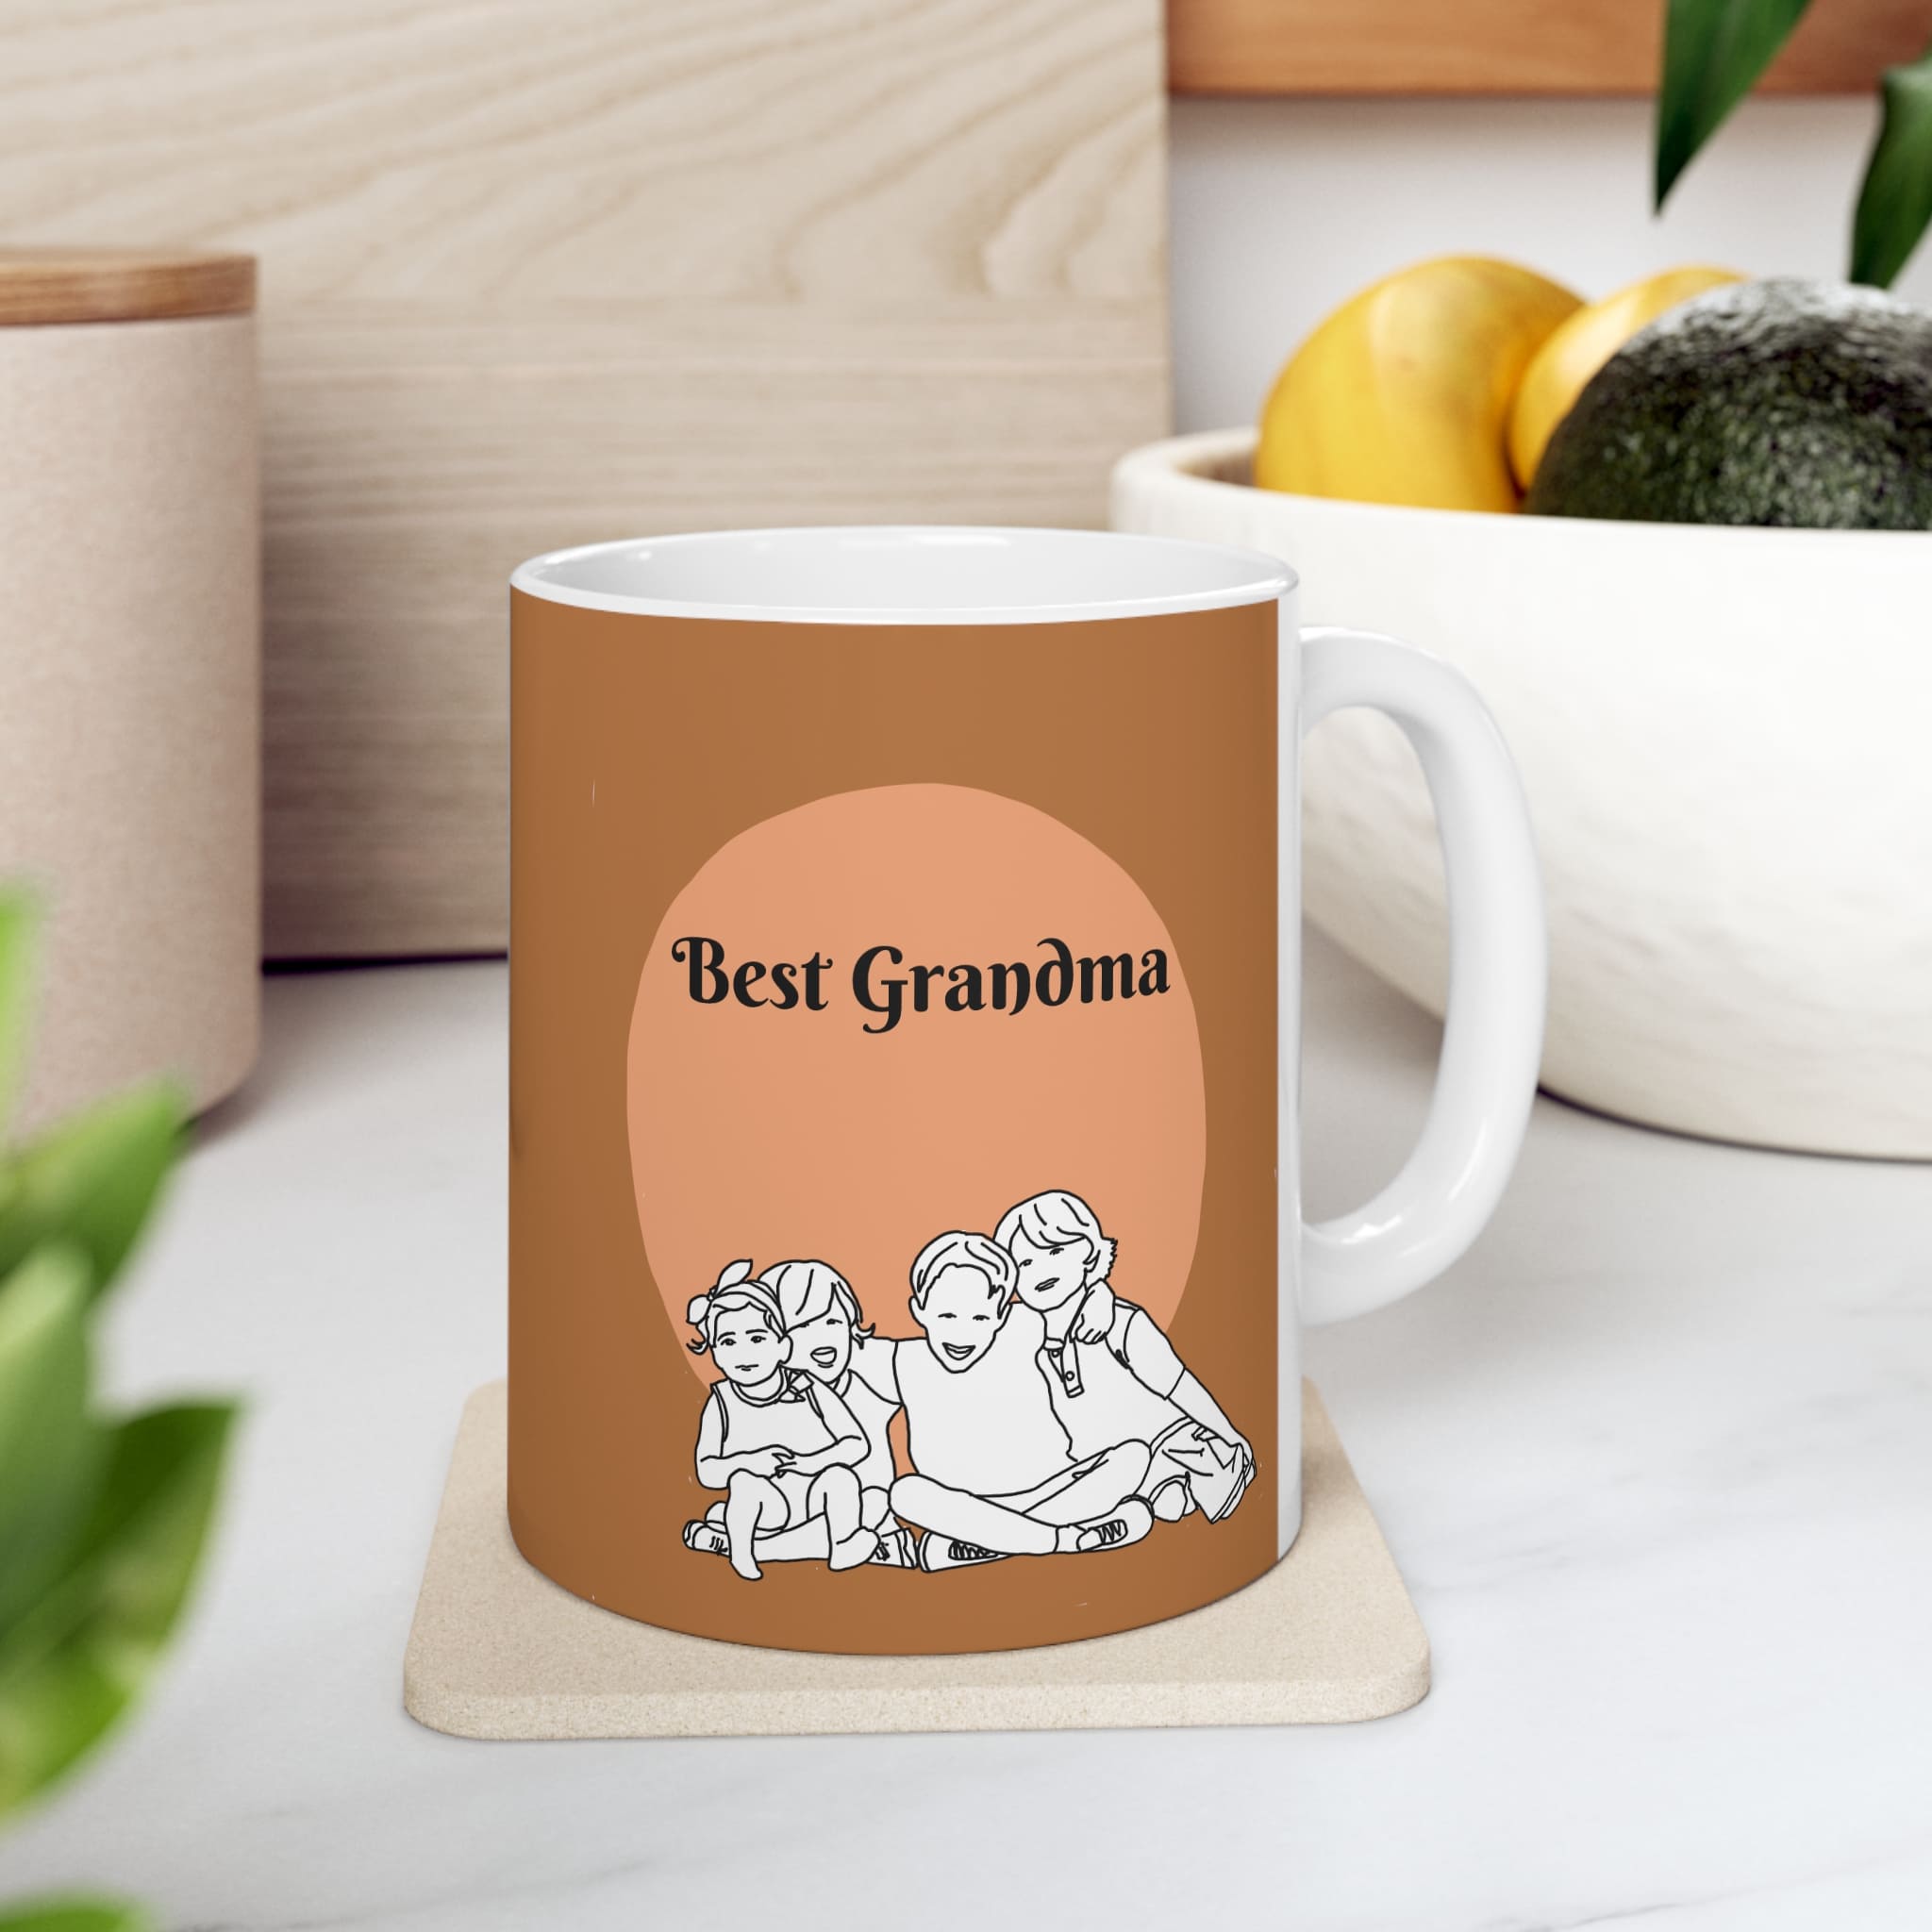 Best grandma custom line art portrait mug of grand kids ideal granny gift scene